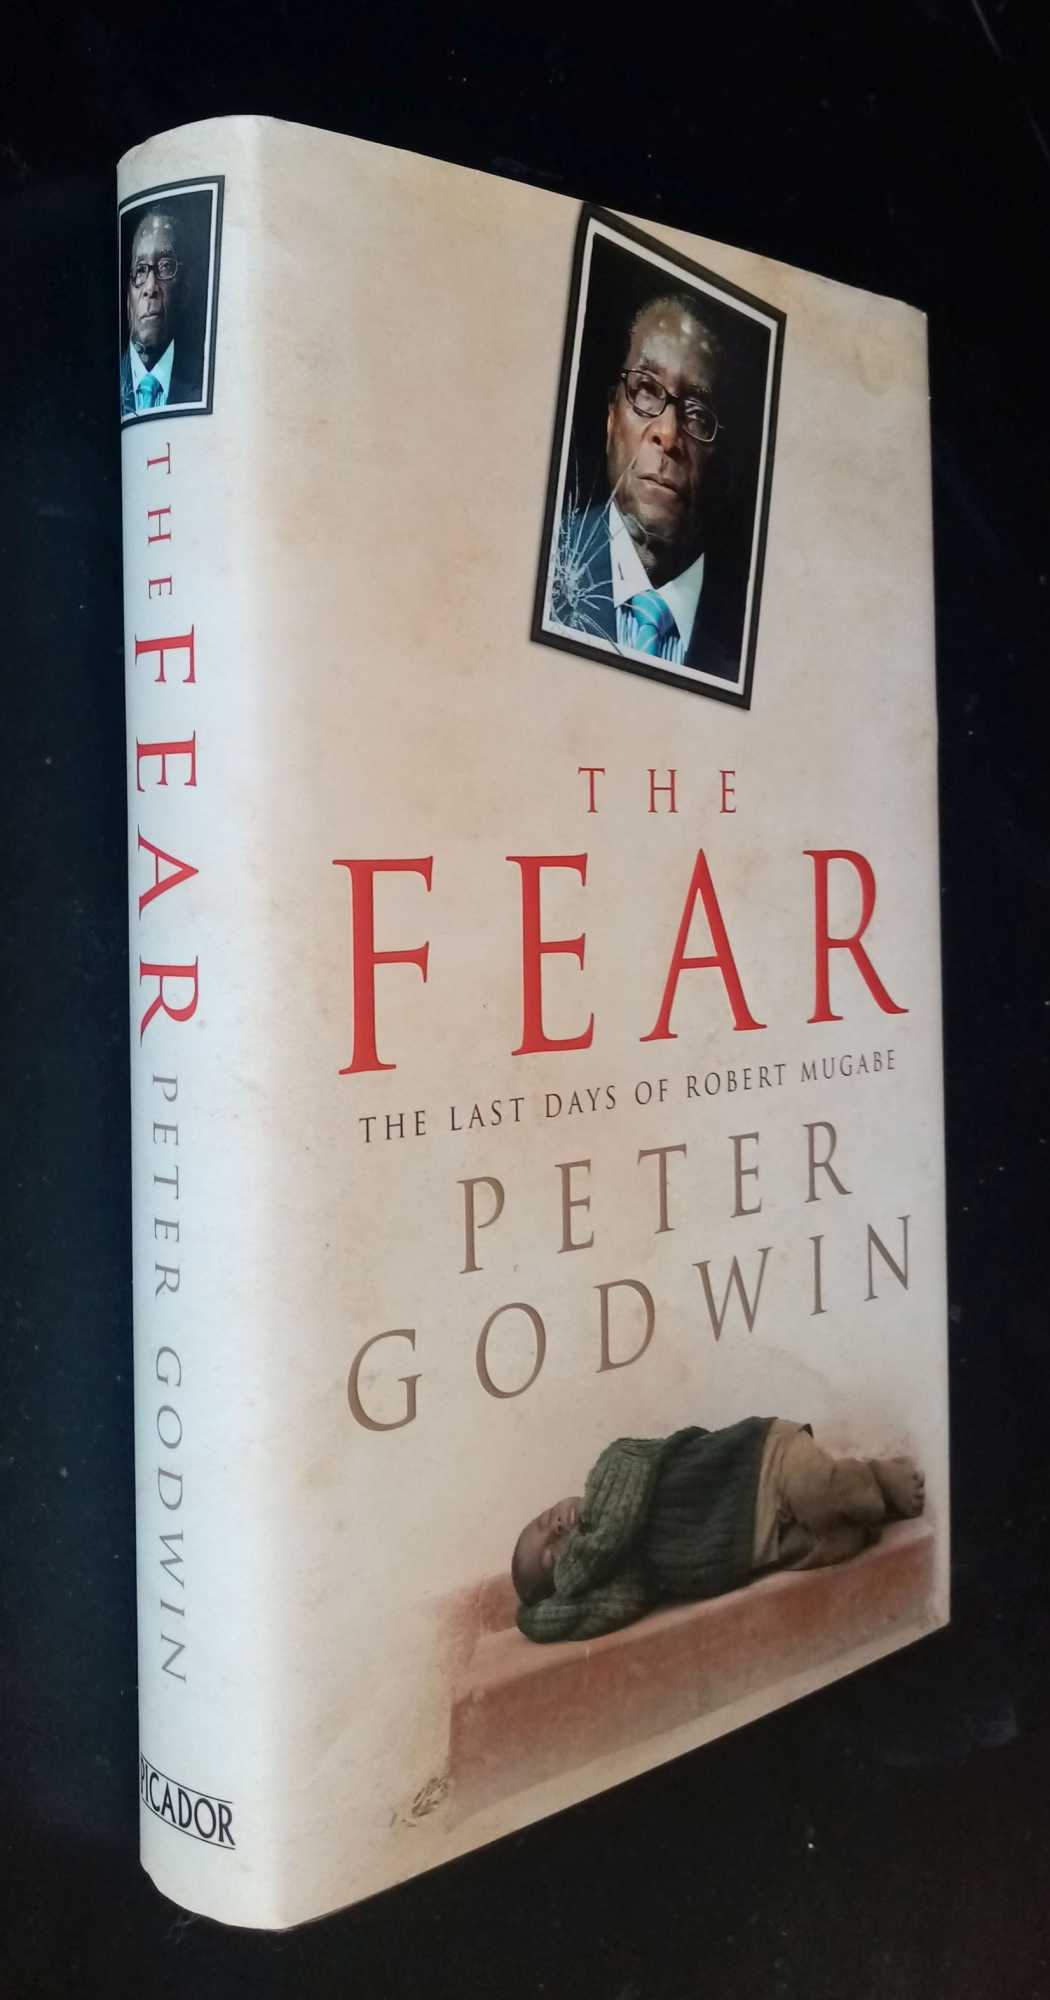 Peter Godwin - The Fear: The Last Days of Robert Mugabe